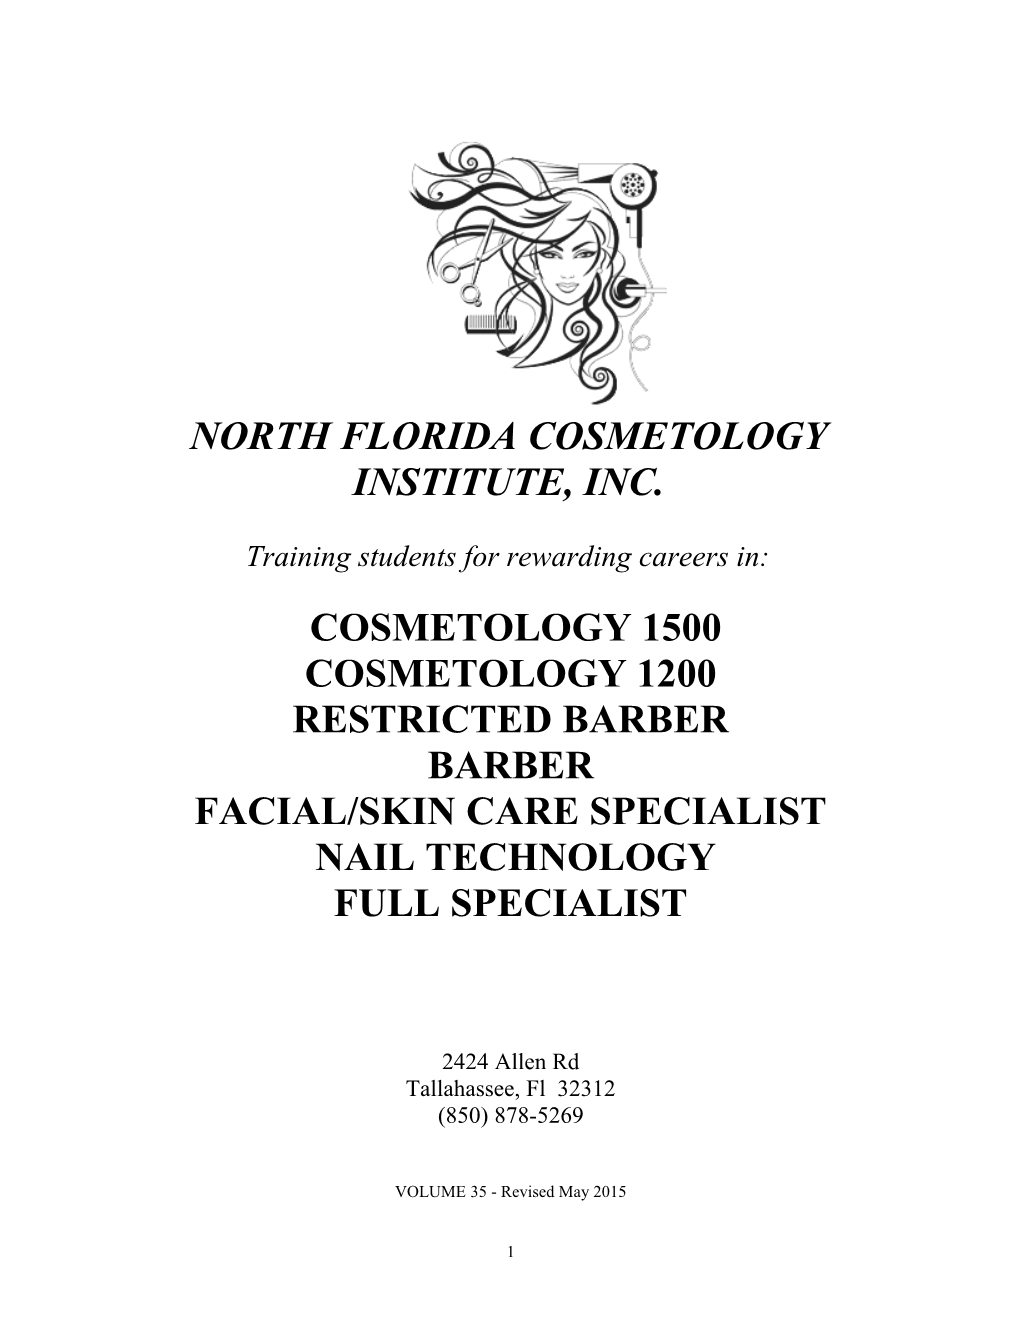 North Florida Cosmetology Institute, Inc